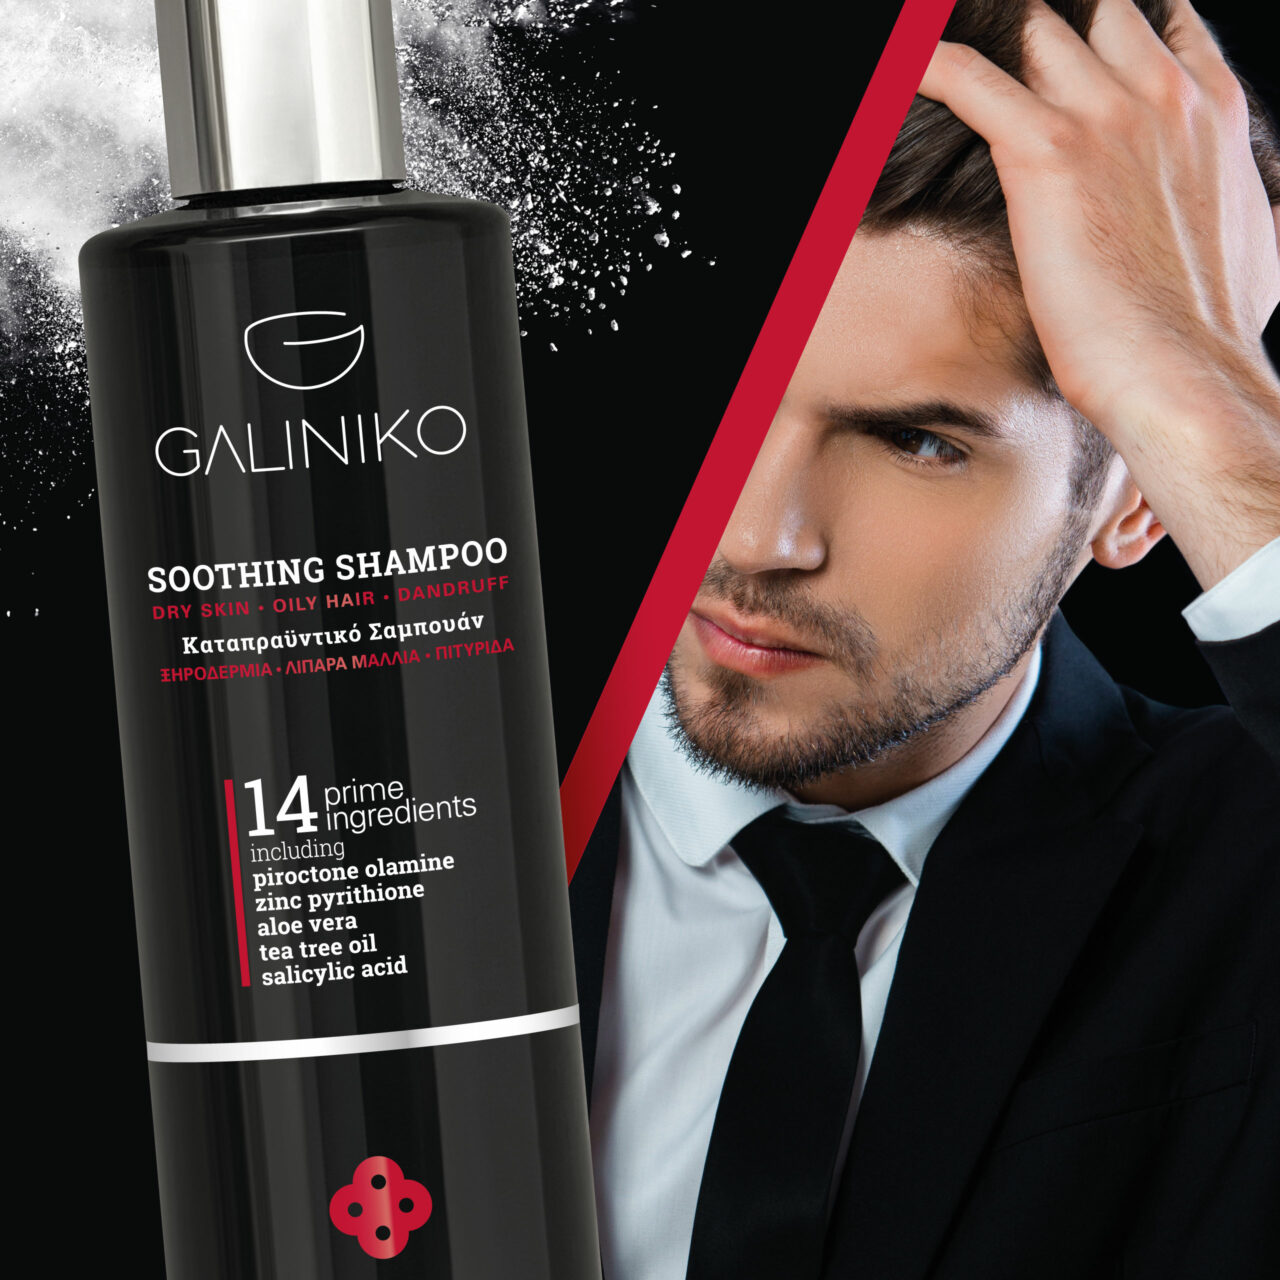 Galiniko soothing dandruff shampoo brand identity and packaging label design